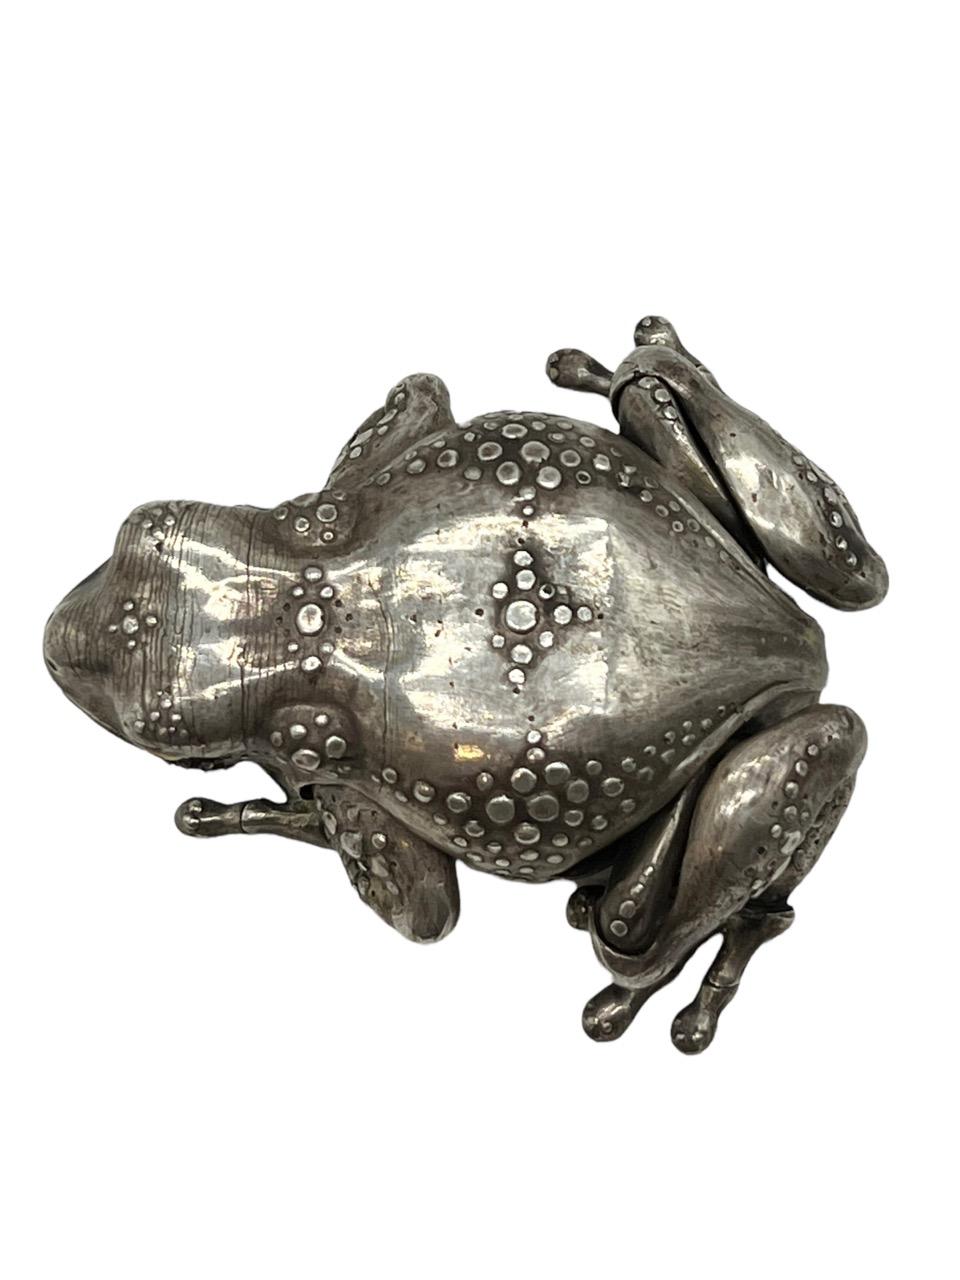 Oleg Konstantinov Fully Articulated Frog Made of Sterling Silver 5